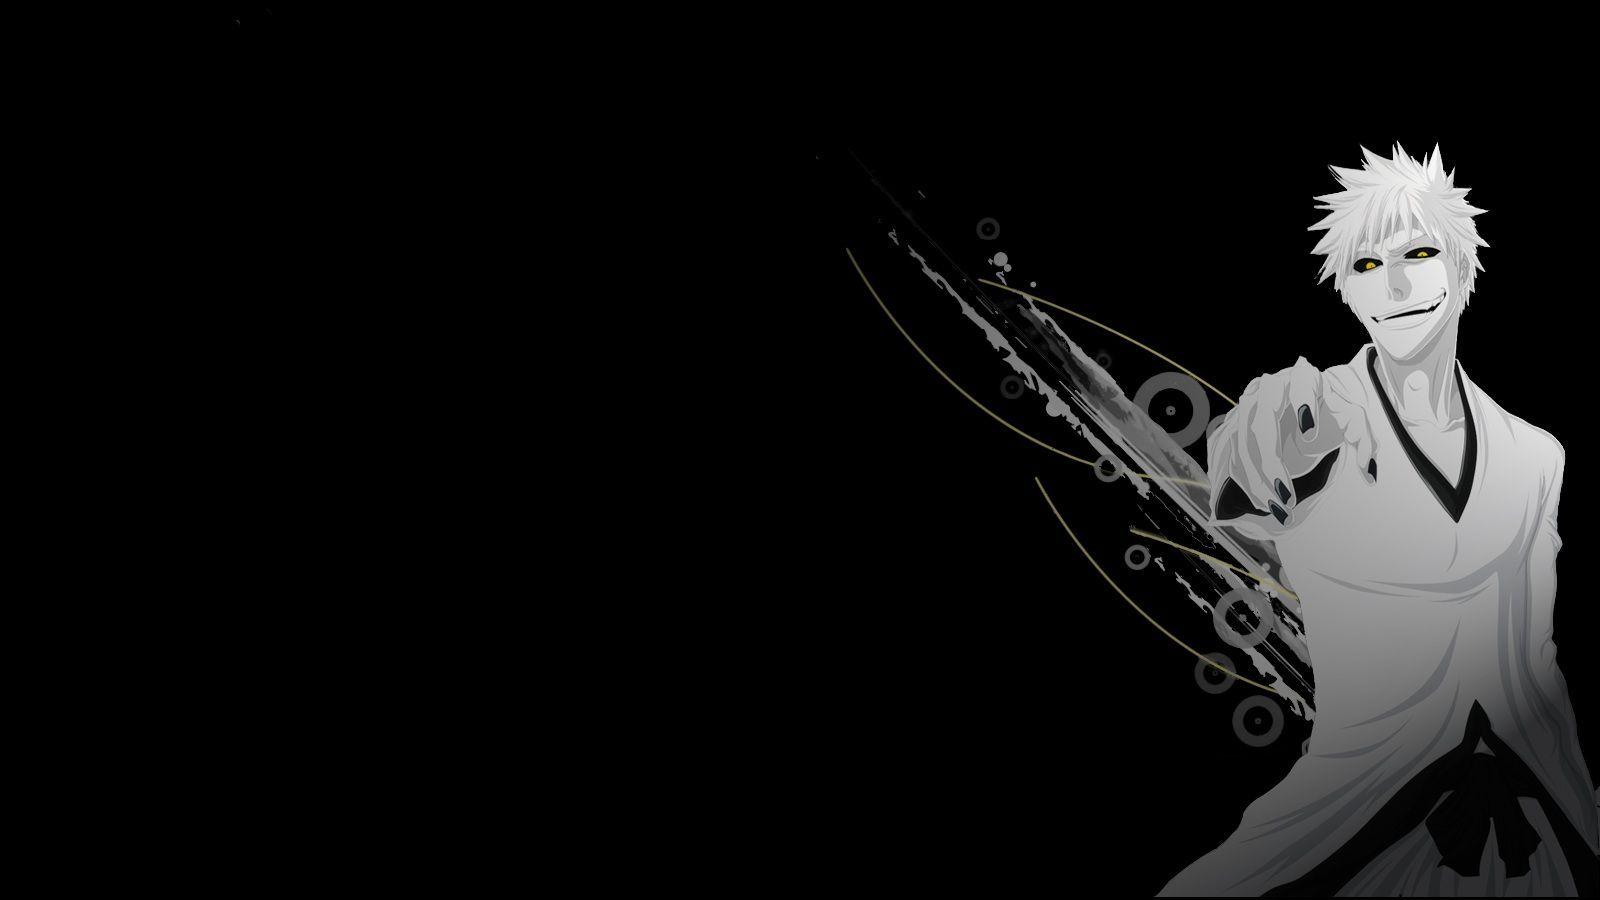 The Image of Bleach Hollow Ichigo Black Backgrounds 1600x900 HD.